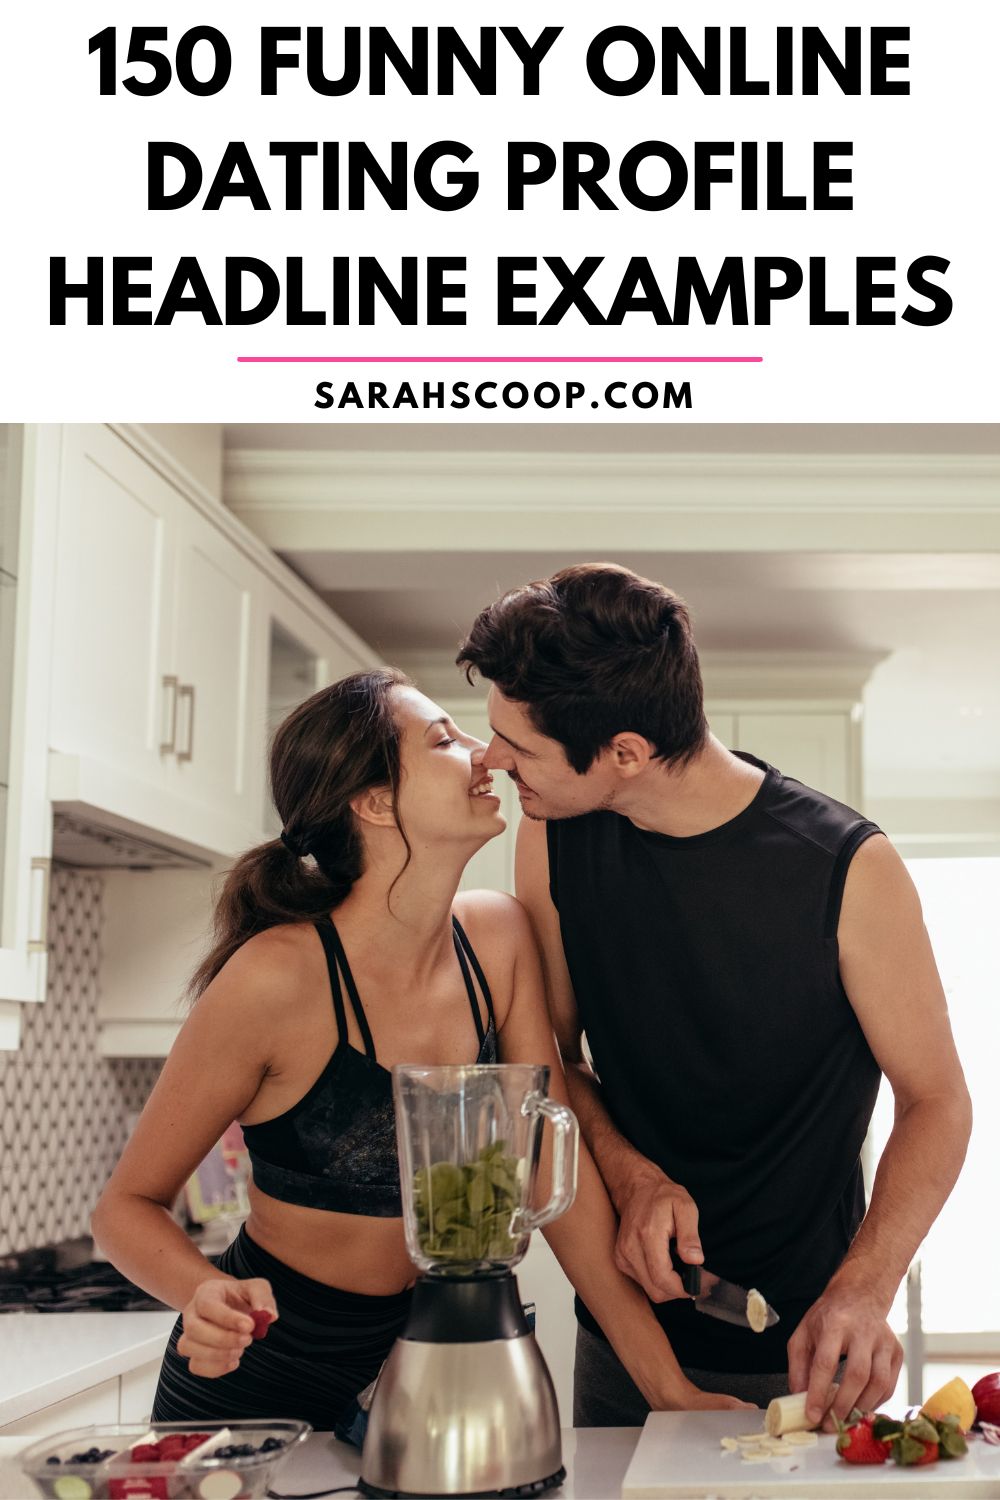 150 Funny Online Dating Profile Headline Examples - Sarah Scoop